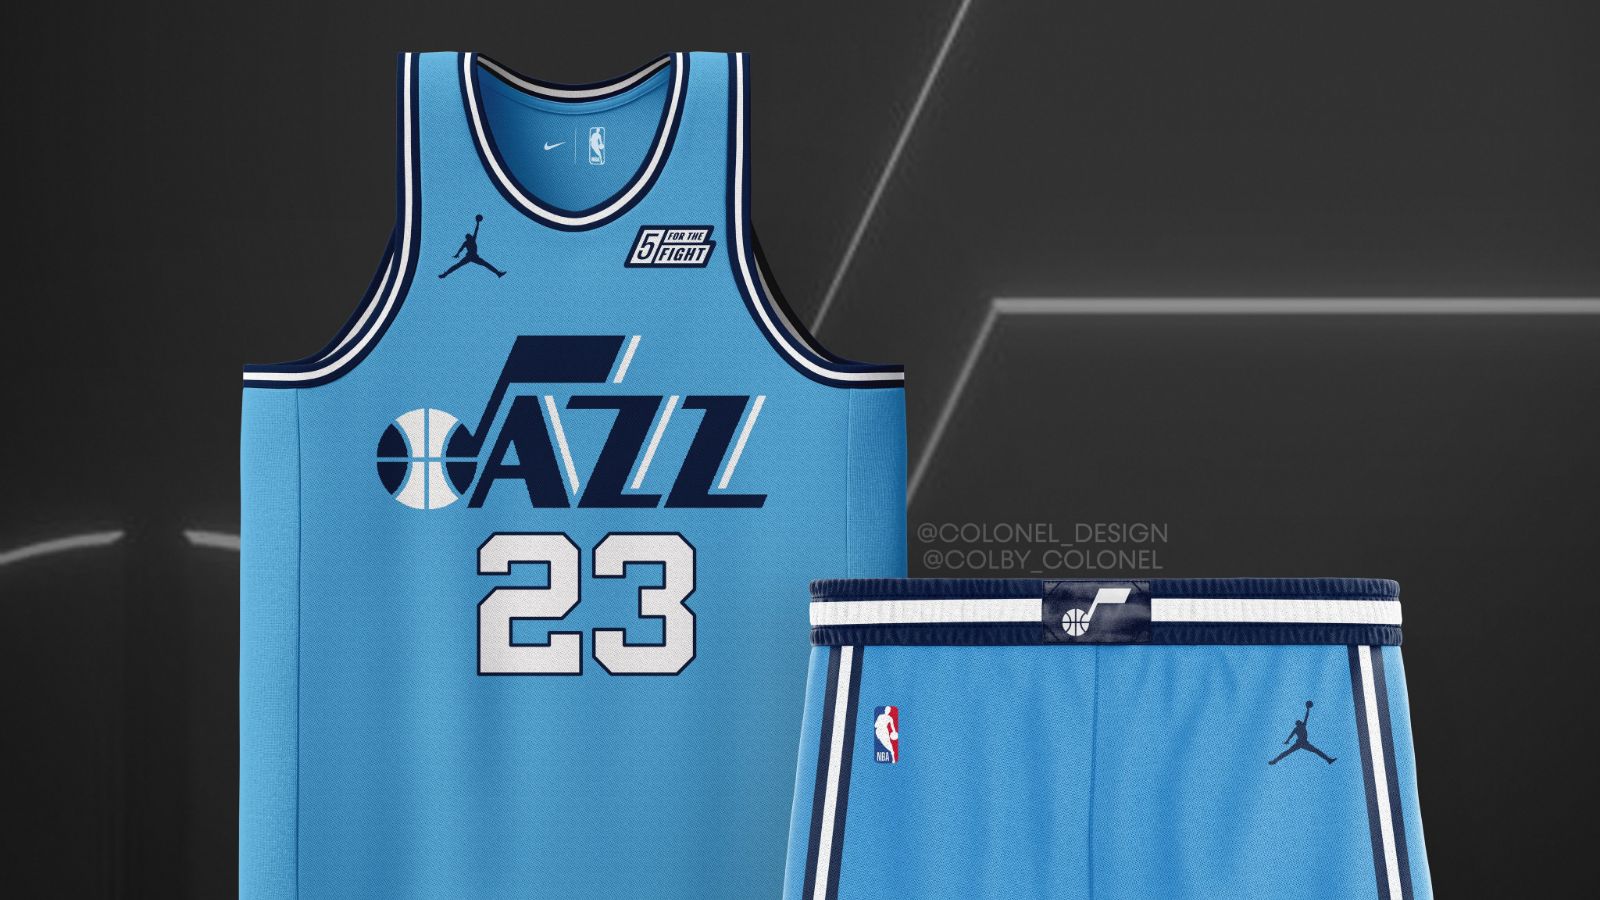 Bad Received Rebrand A Year Ago - New Utah Jazz Rebrand Concepts